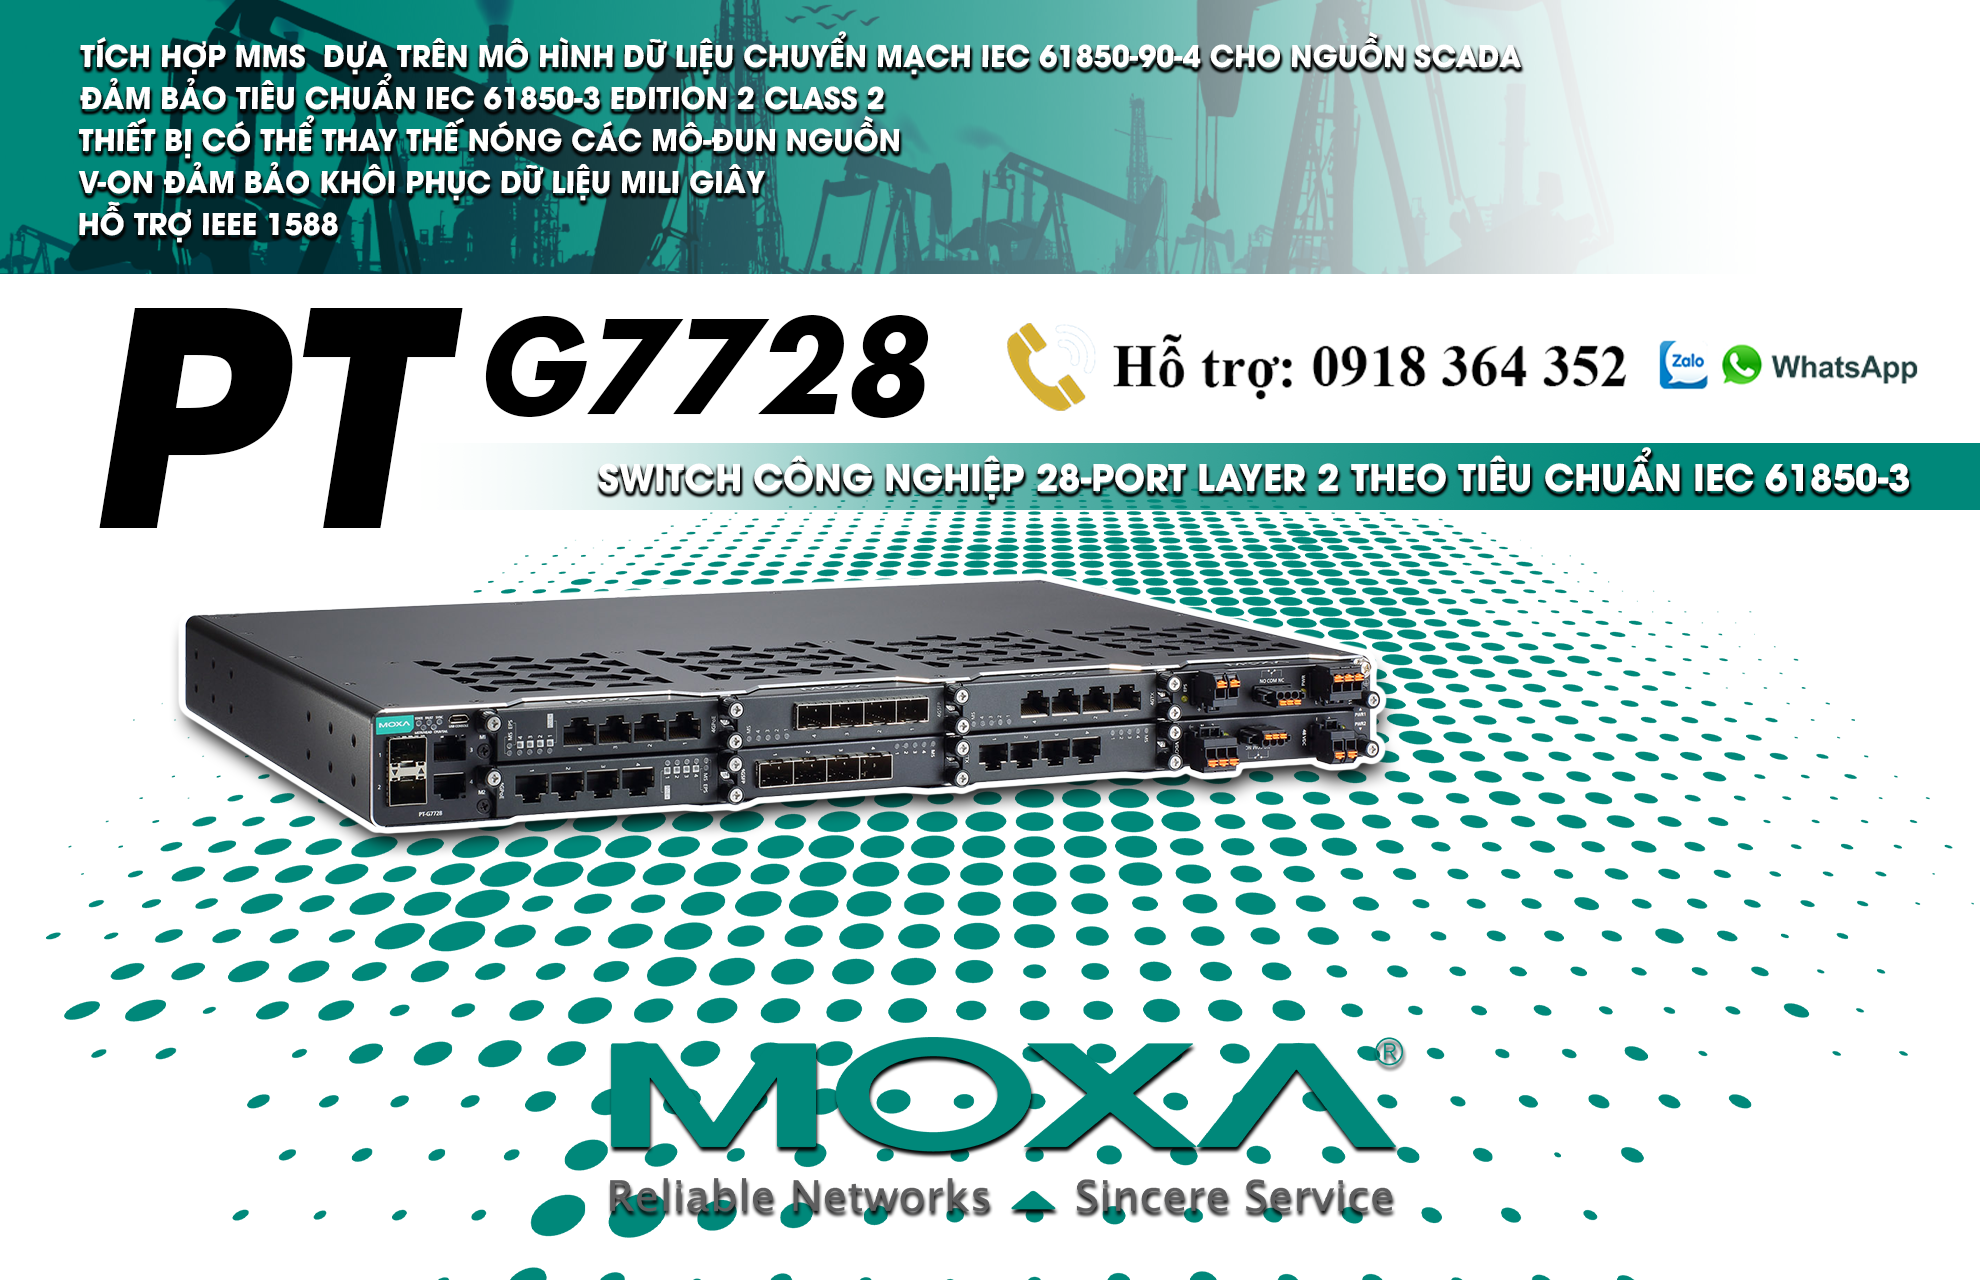 pt-g7728-switch-cong-nghiep-28-port-layer-2-theo-tieu-chuan-iec-61850-3-moxa-viet-nam.png